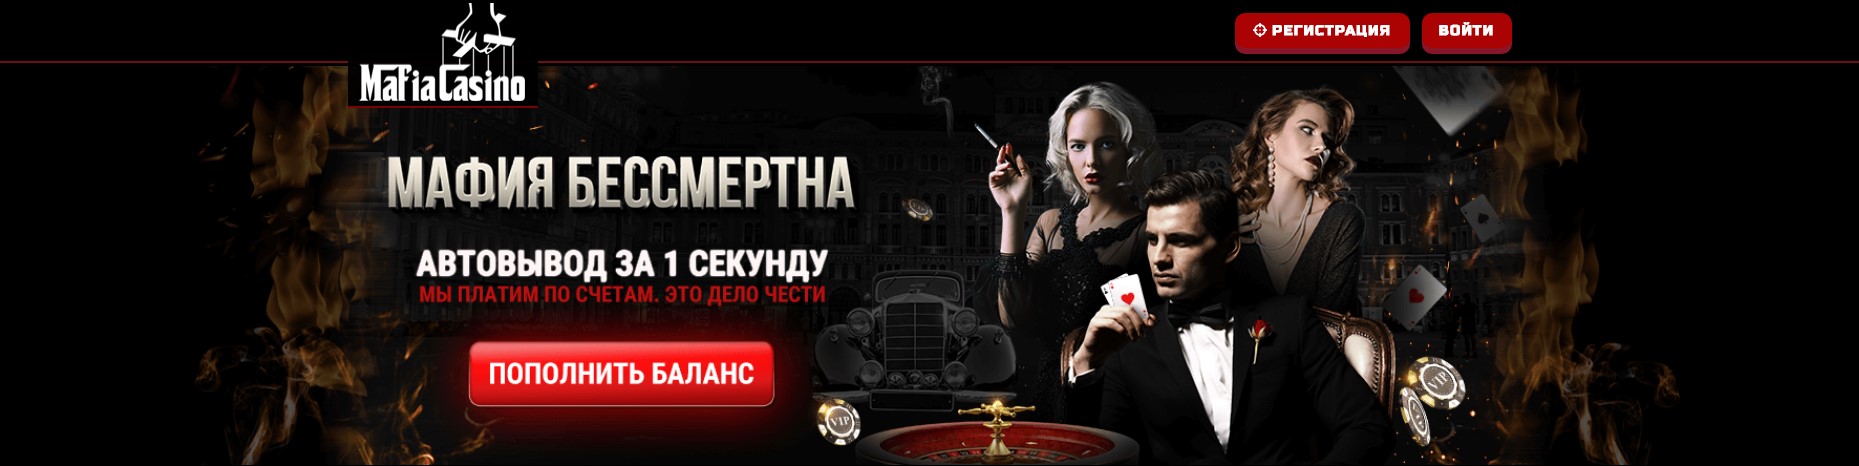 Mafia Casino.jpg